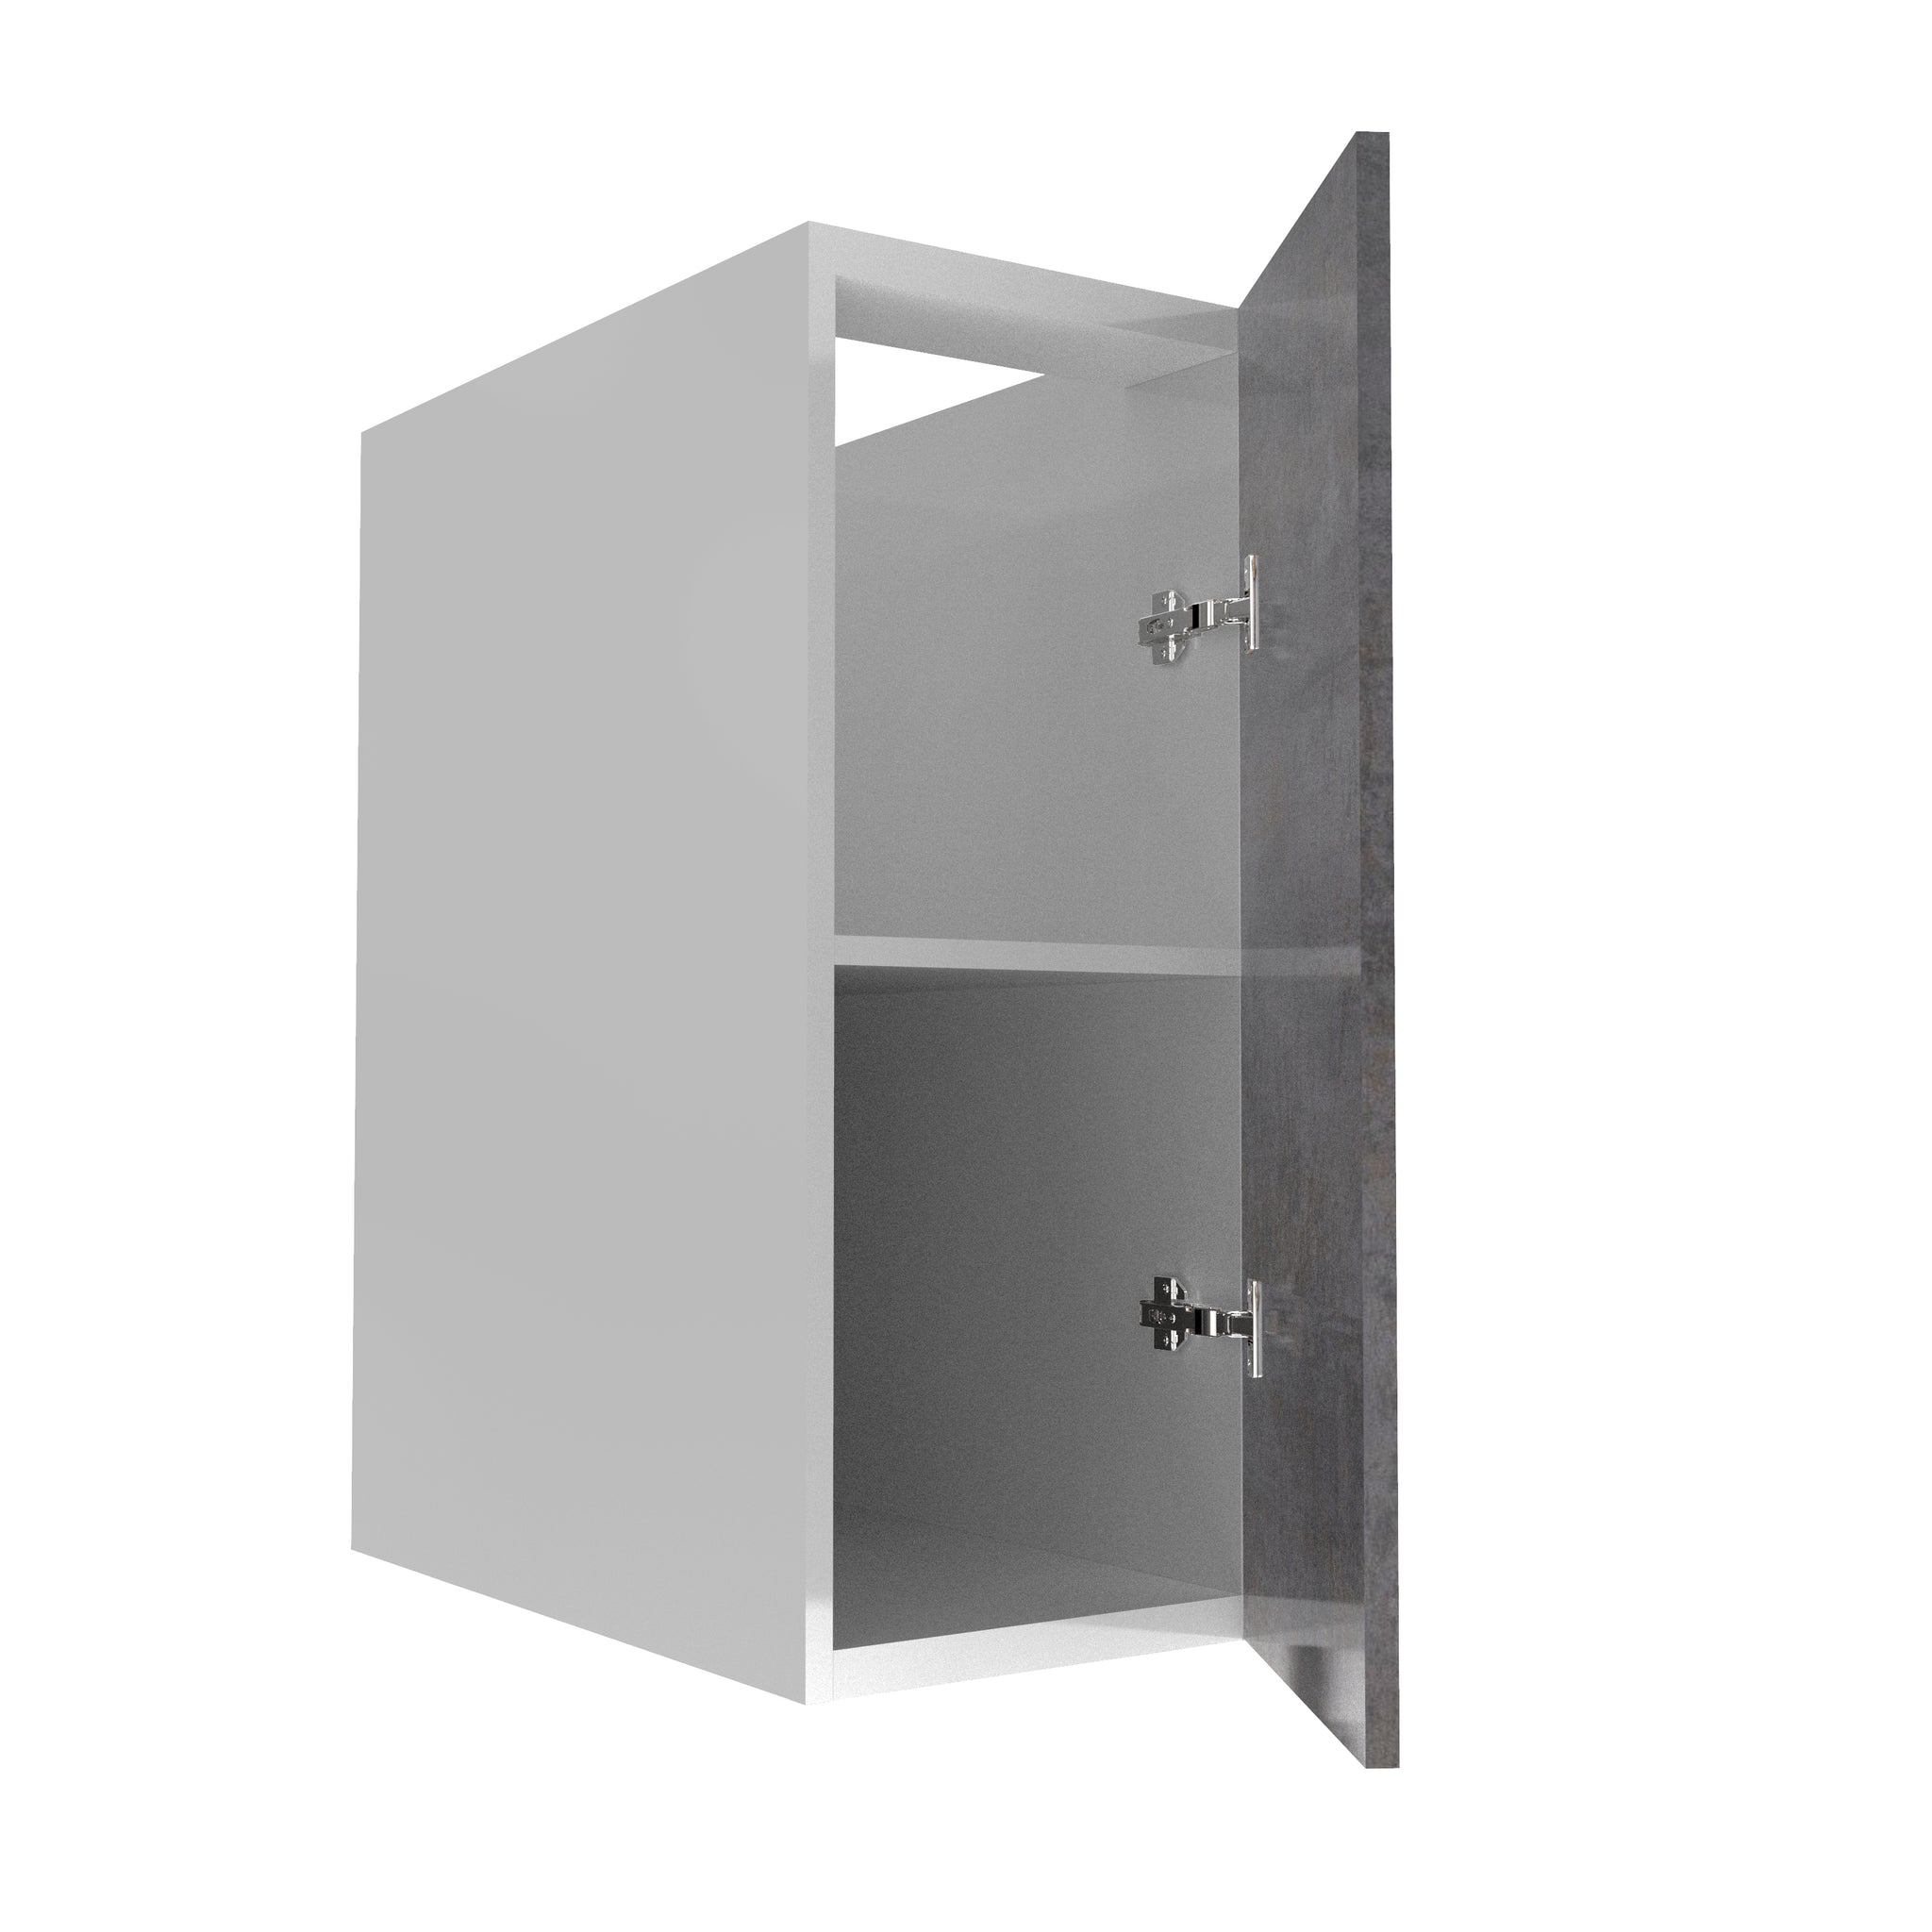 RTA - Rustic Grey - Full Height Single Door Base Cabinets | 12"W x 34.5"H x 24"D